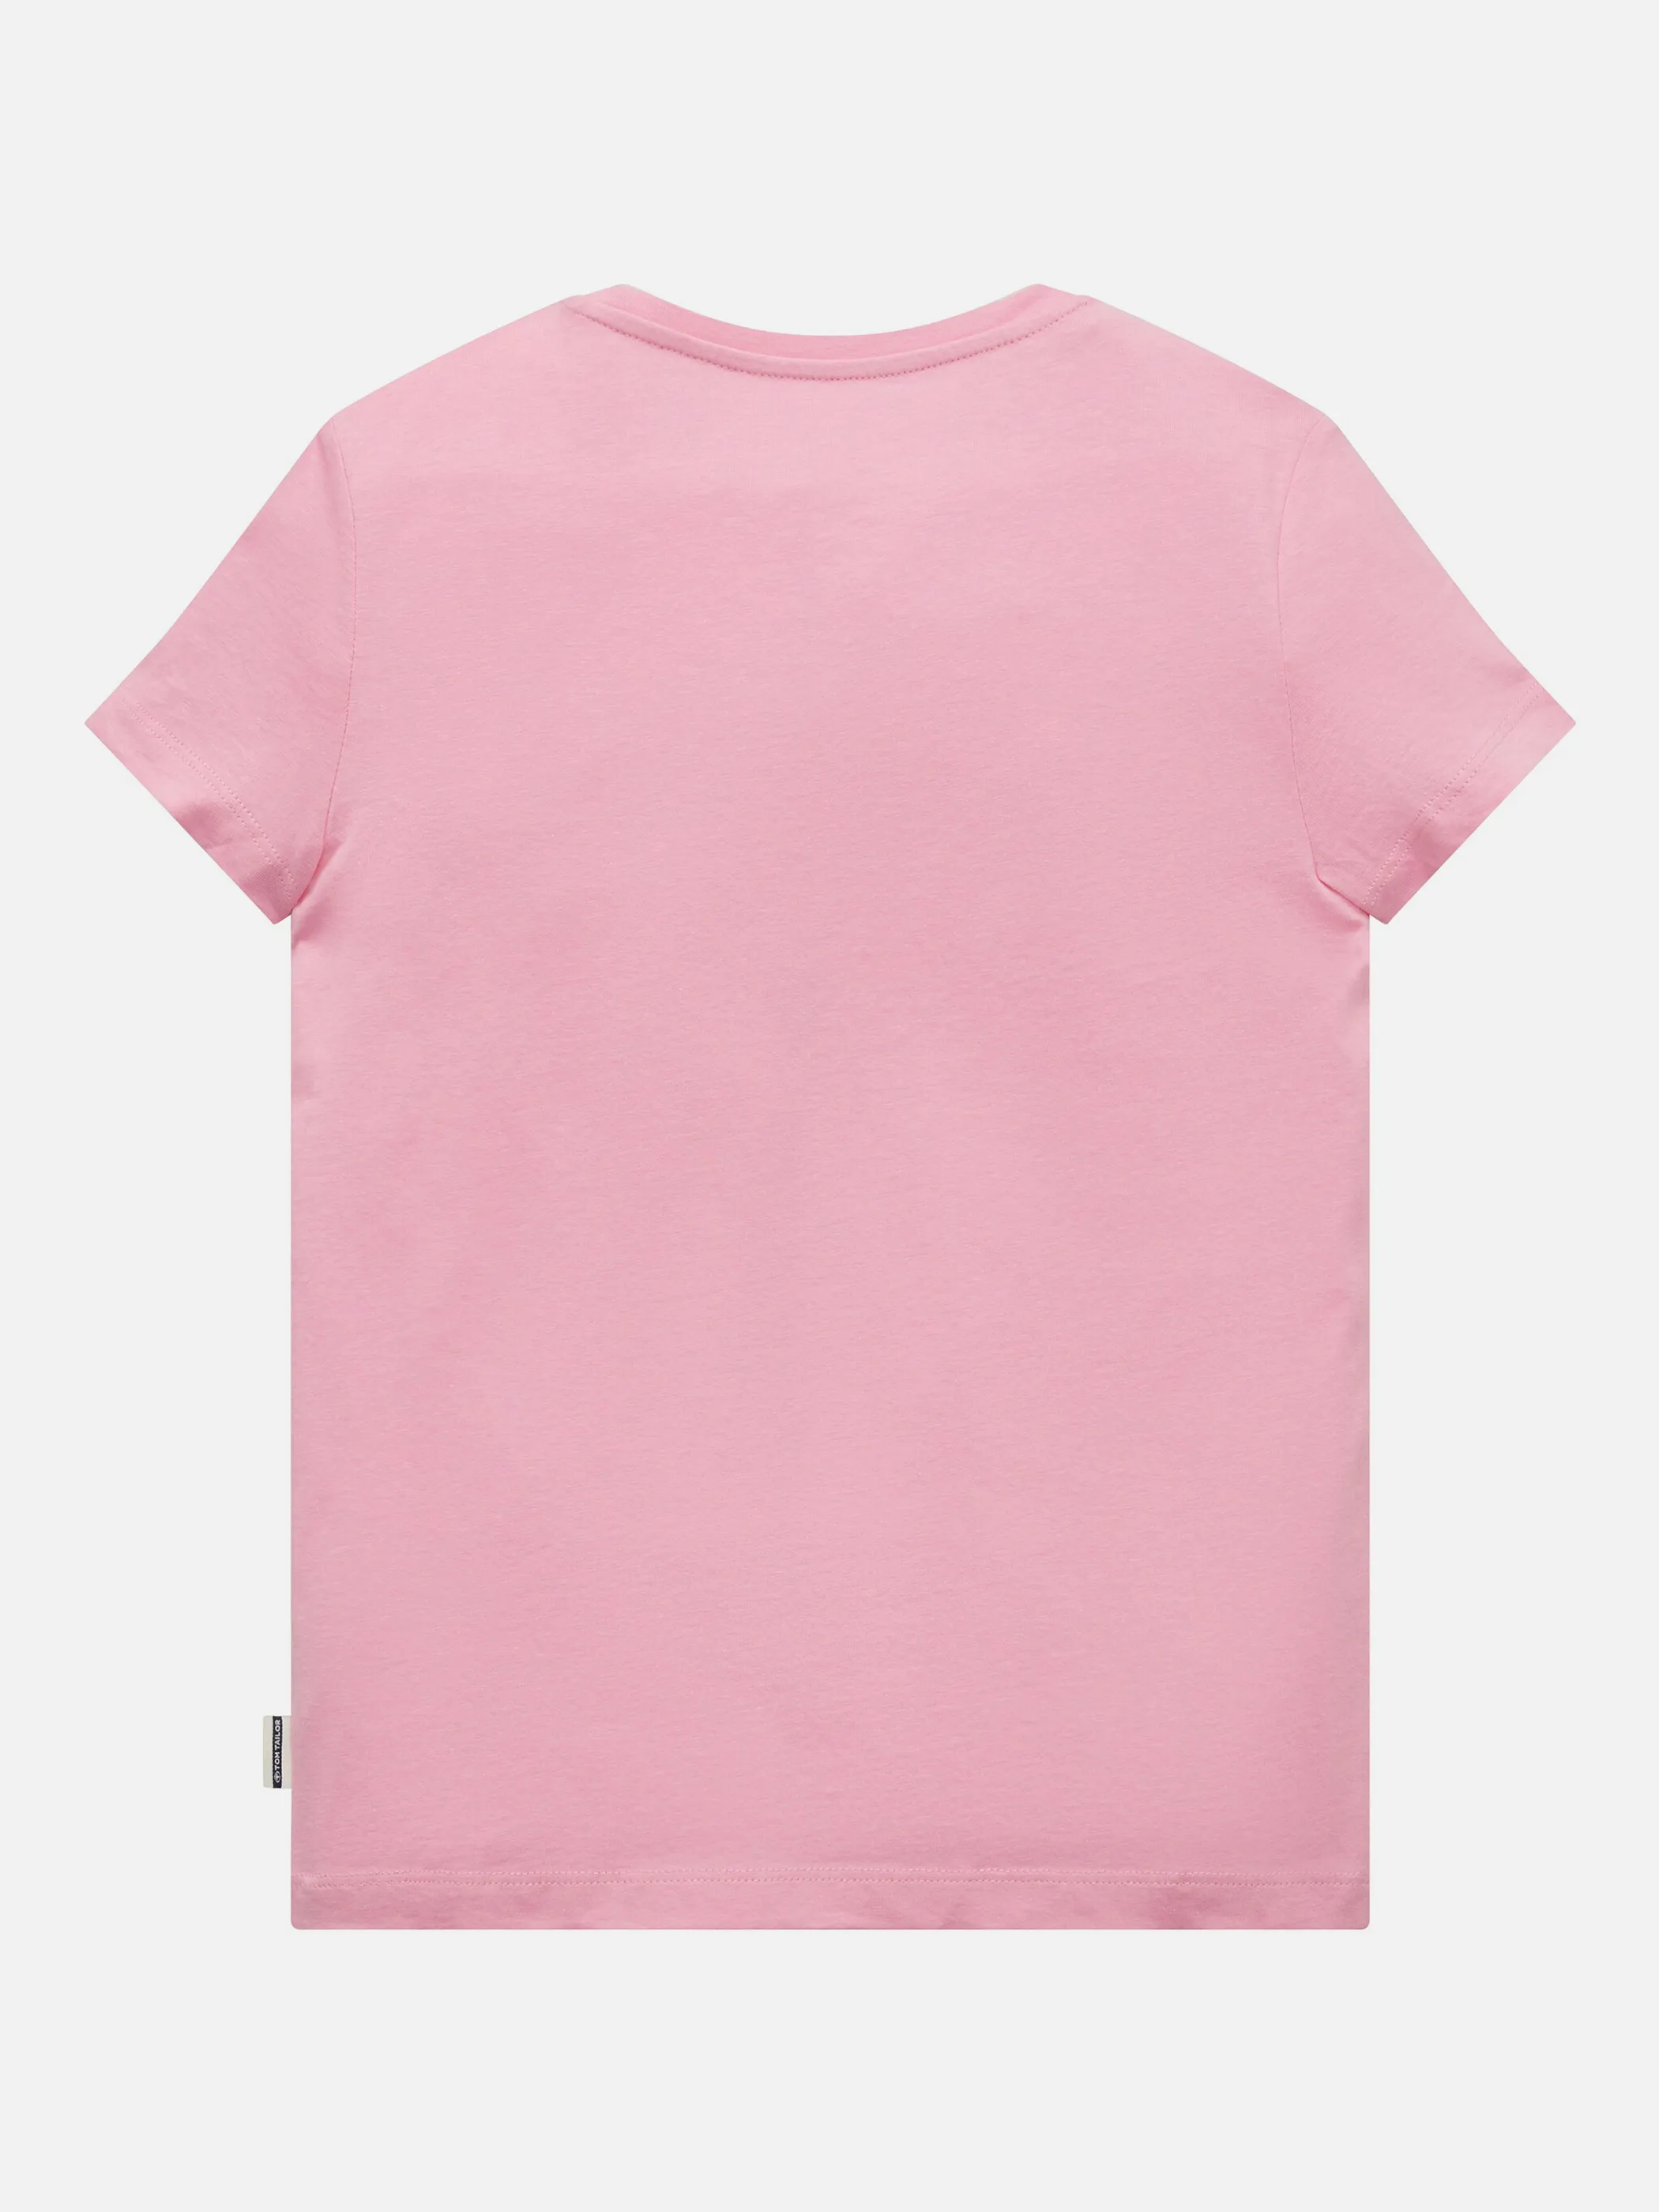 Tom Tailor 1031376 printed t-shirt Pink 865857 12095 2